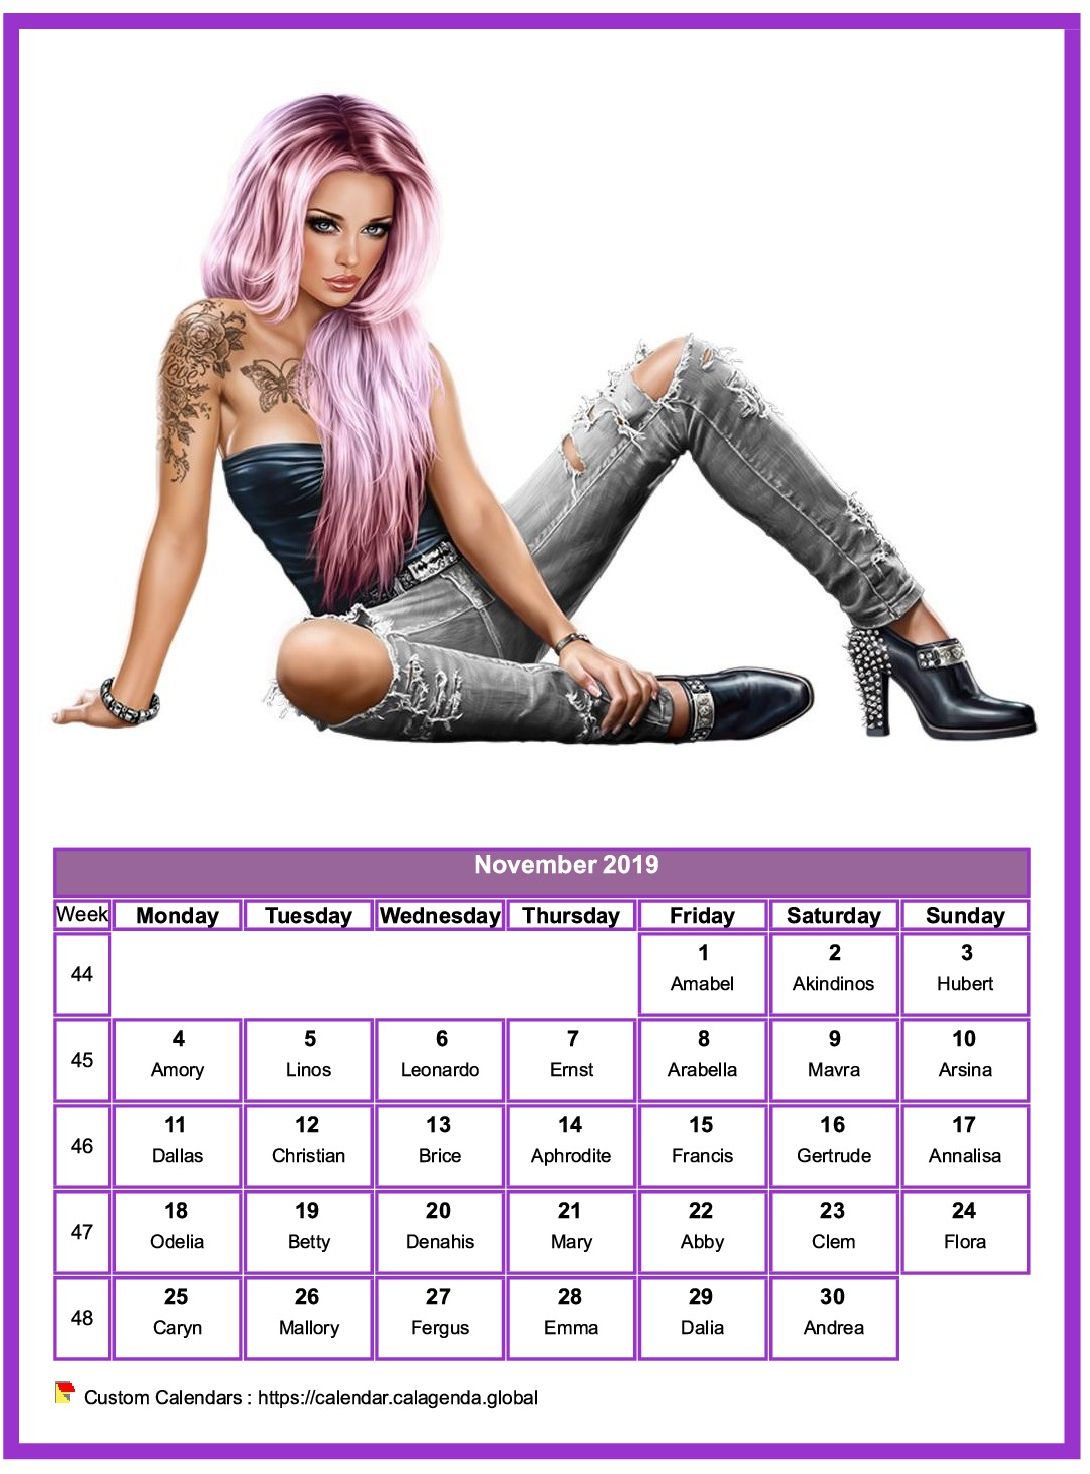 Calendar November 2019 women